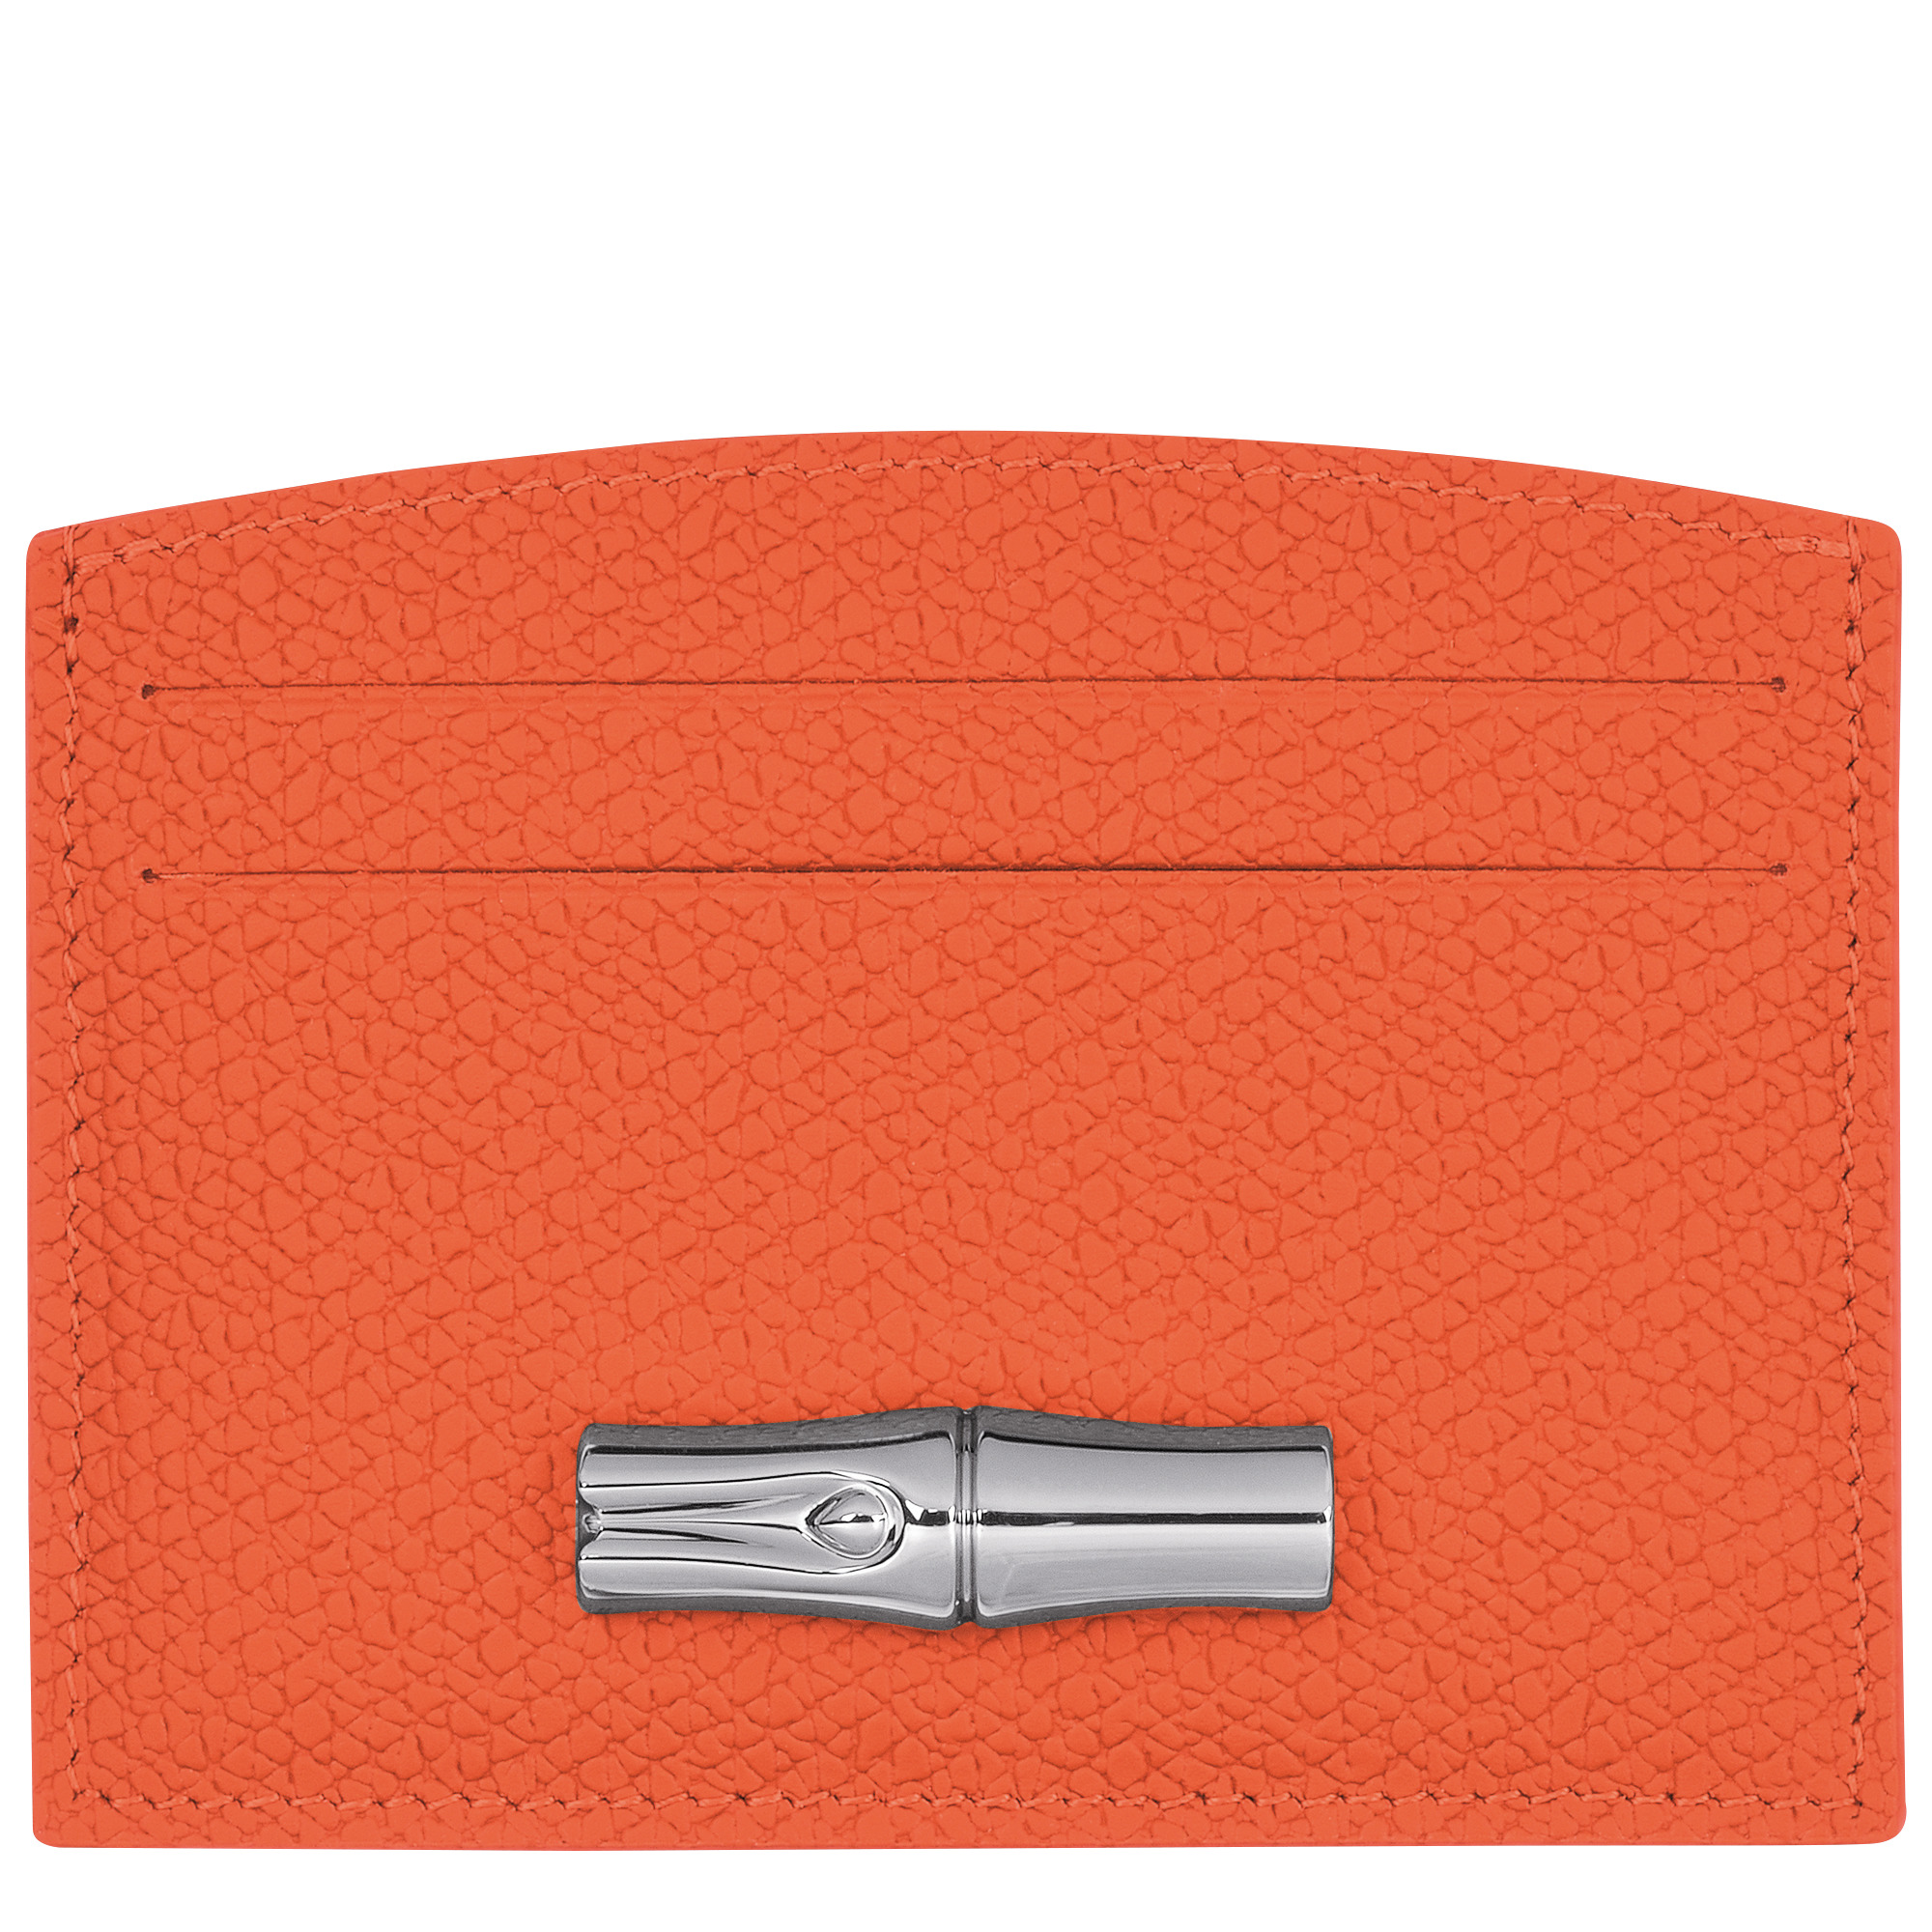 Roseau Card holder Orange - Leather - 1